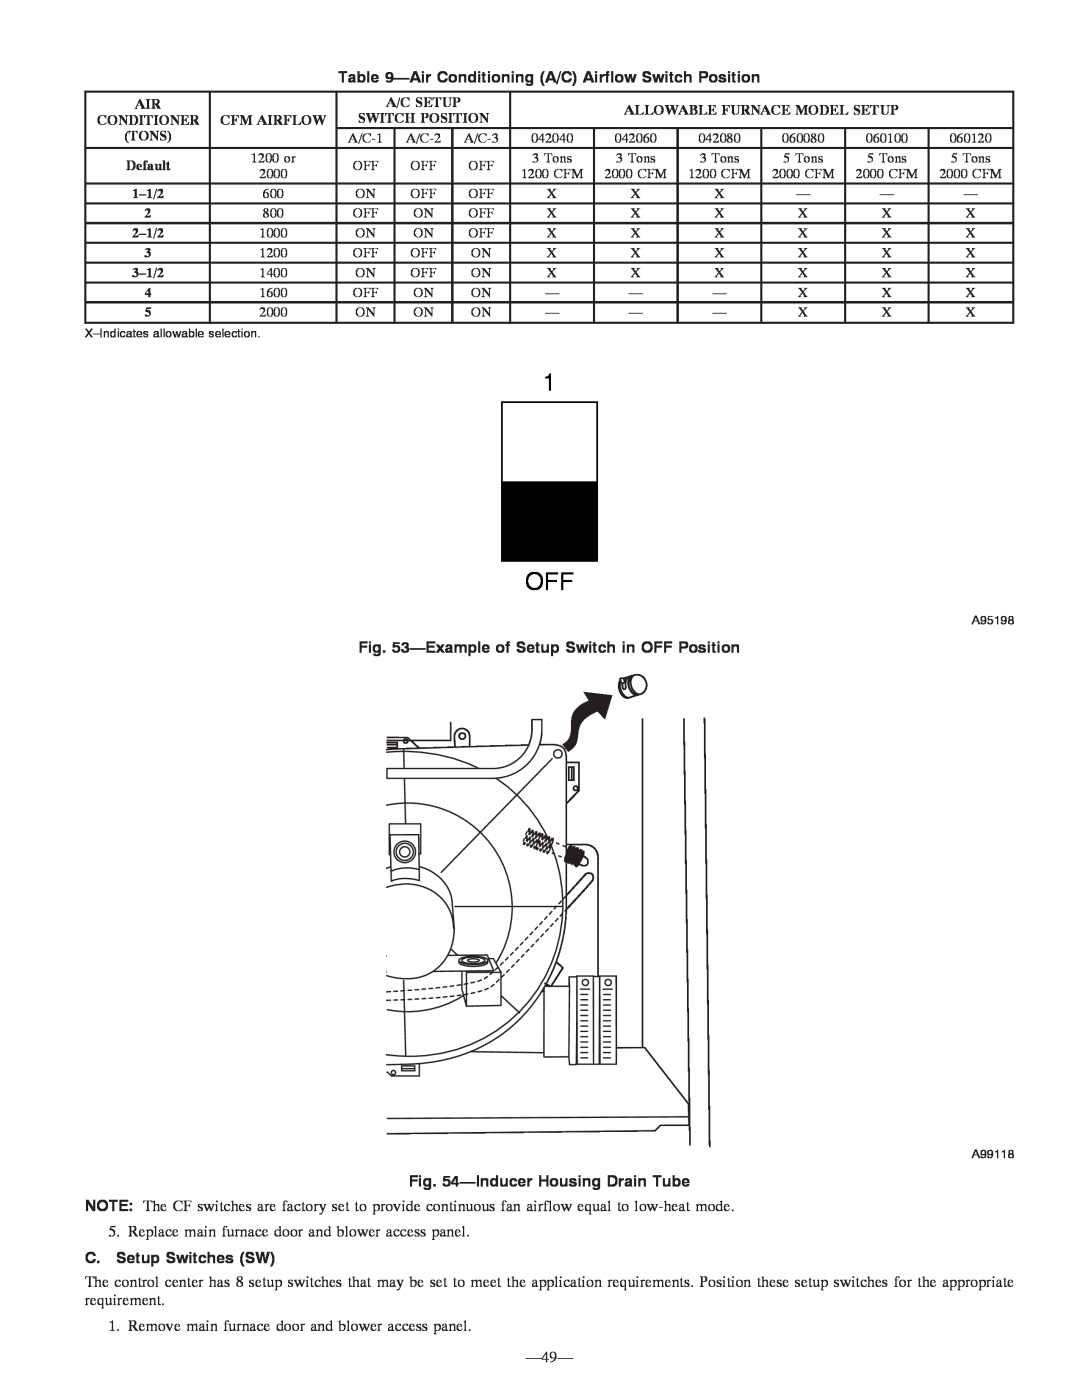 Bryant 355MAV Exampleof Setup Switch in OFF Position, InducerHousing Drain Tube, C. Setup Switches SW, 1 OFF 